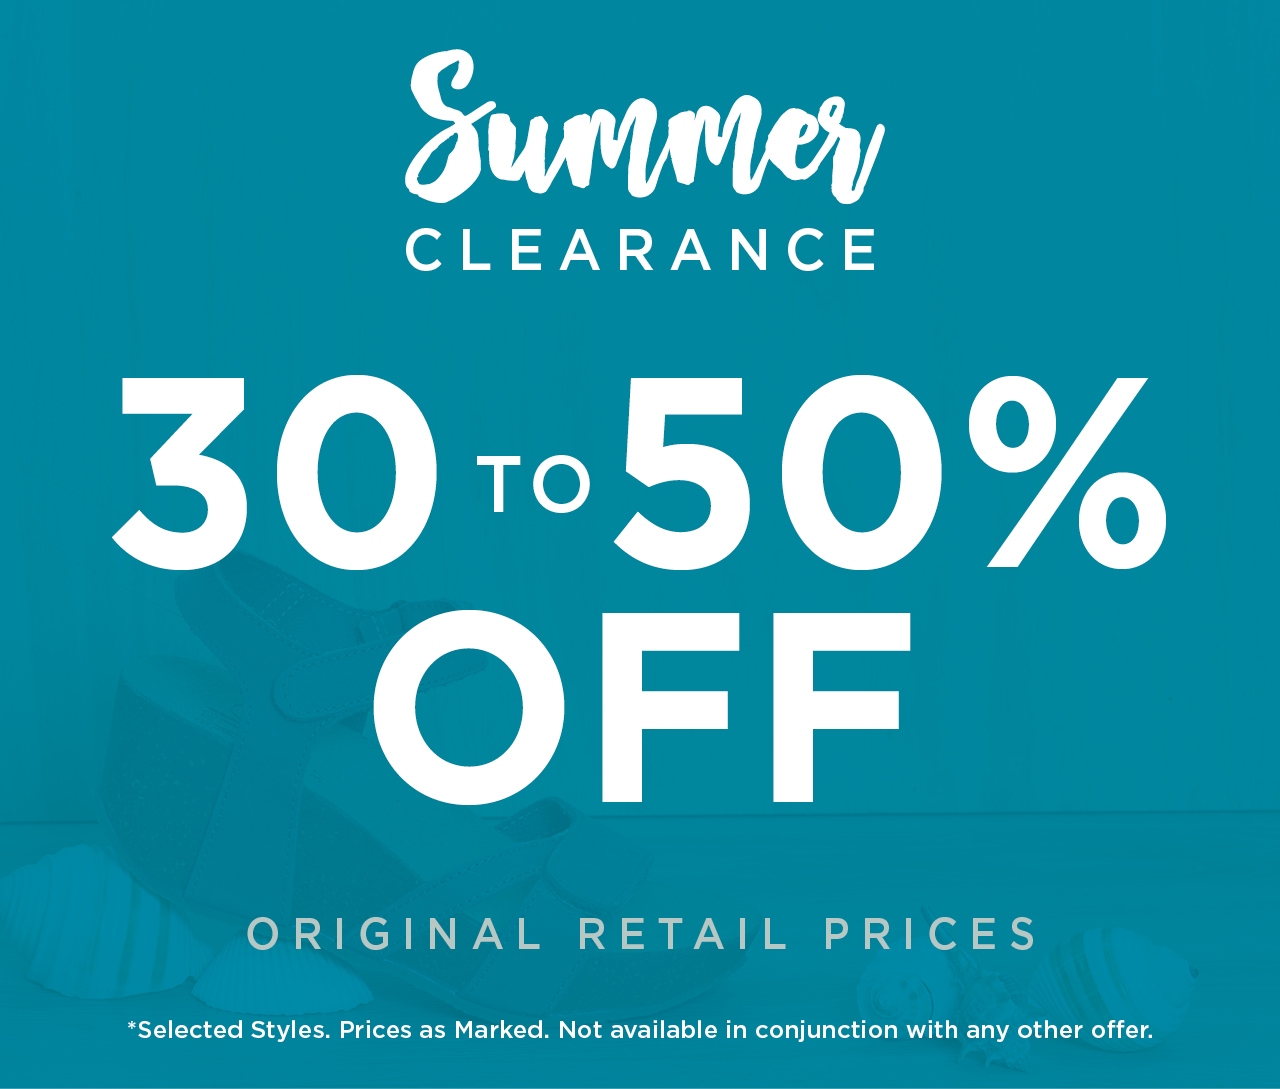 hannahs-30-50-off-summer-clearance-sale-northwest-shopping-centre